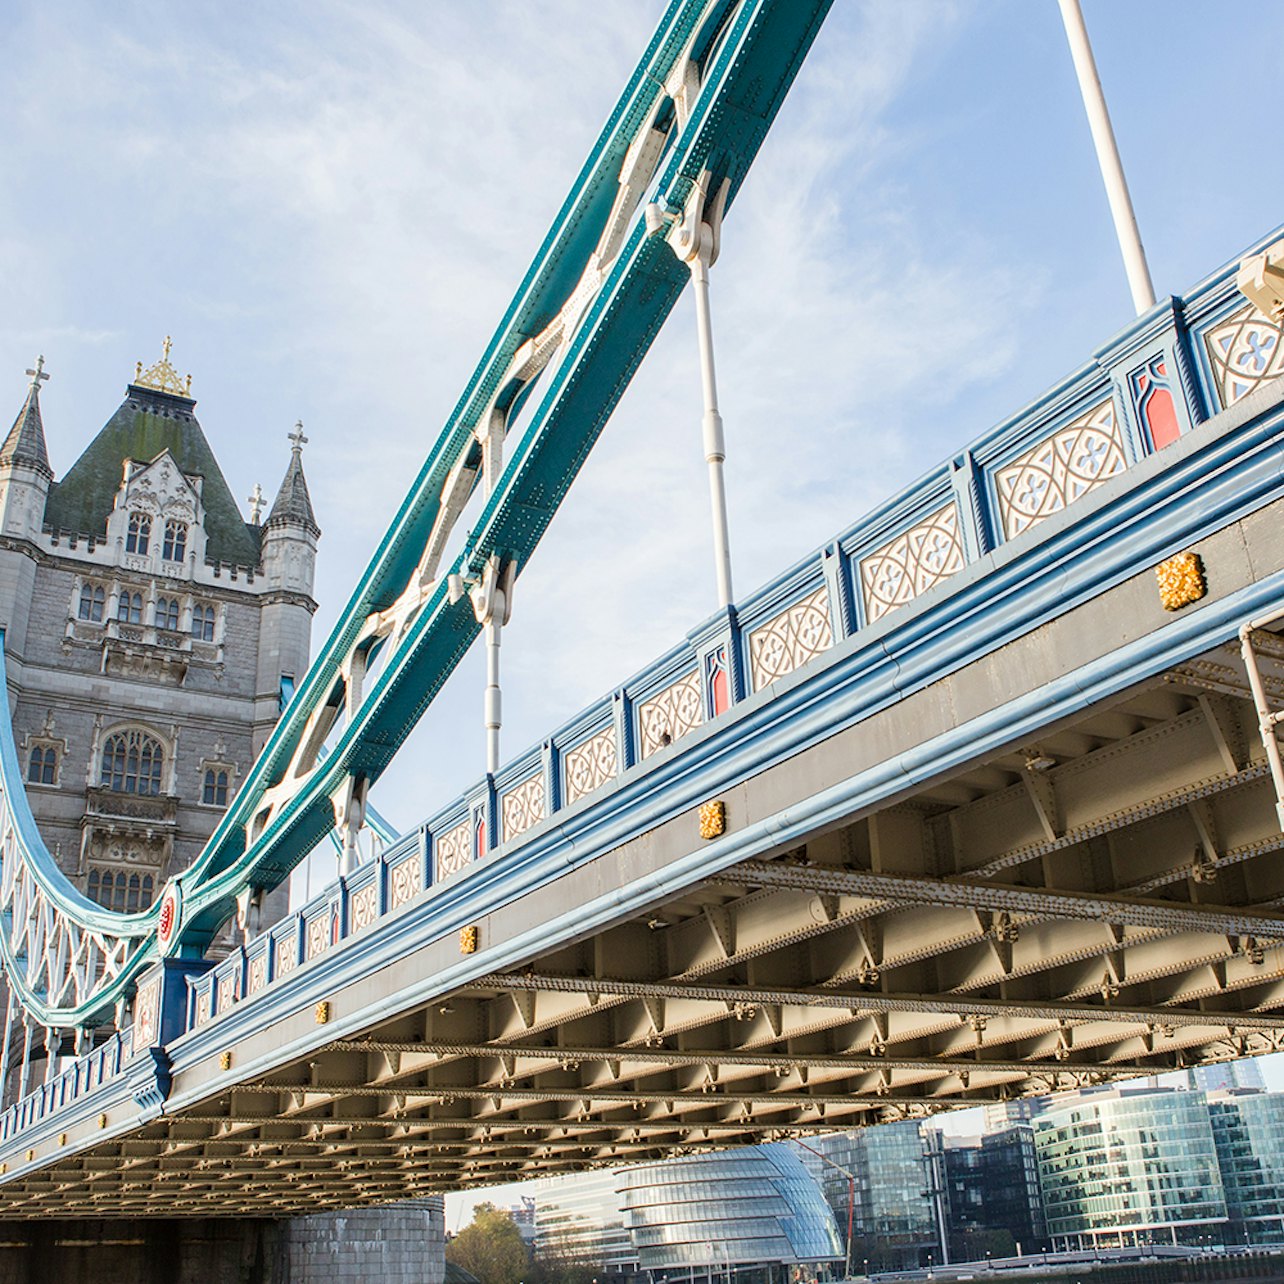 Tower Bridge - Accommodations in London